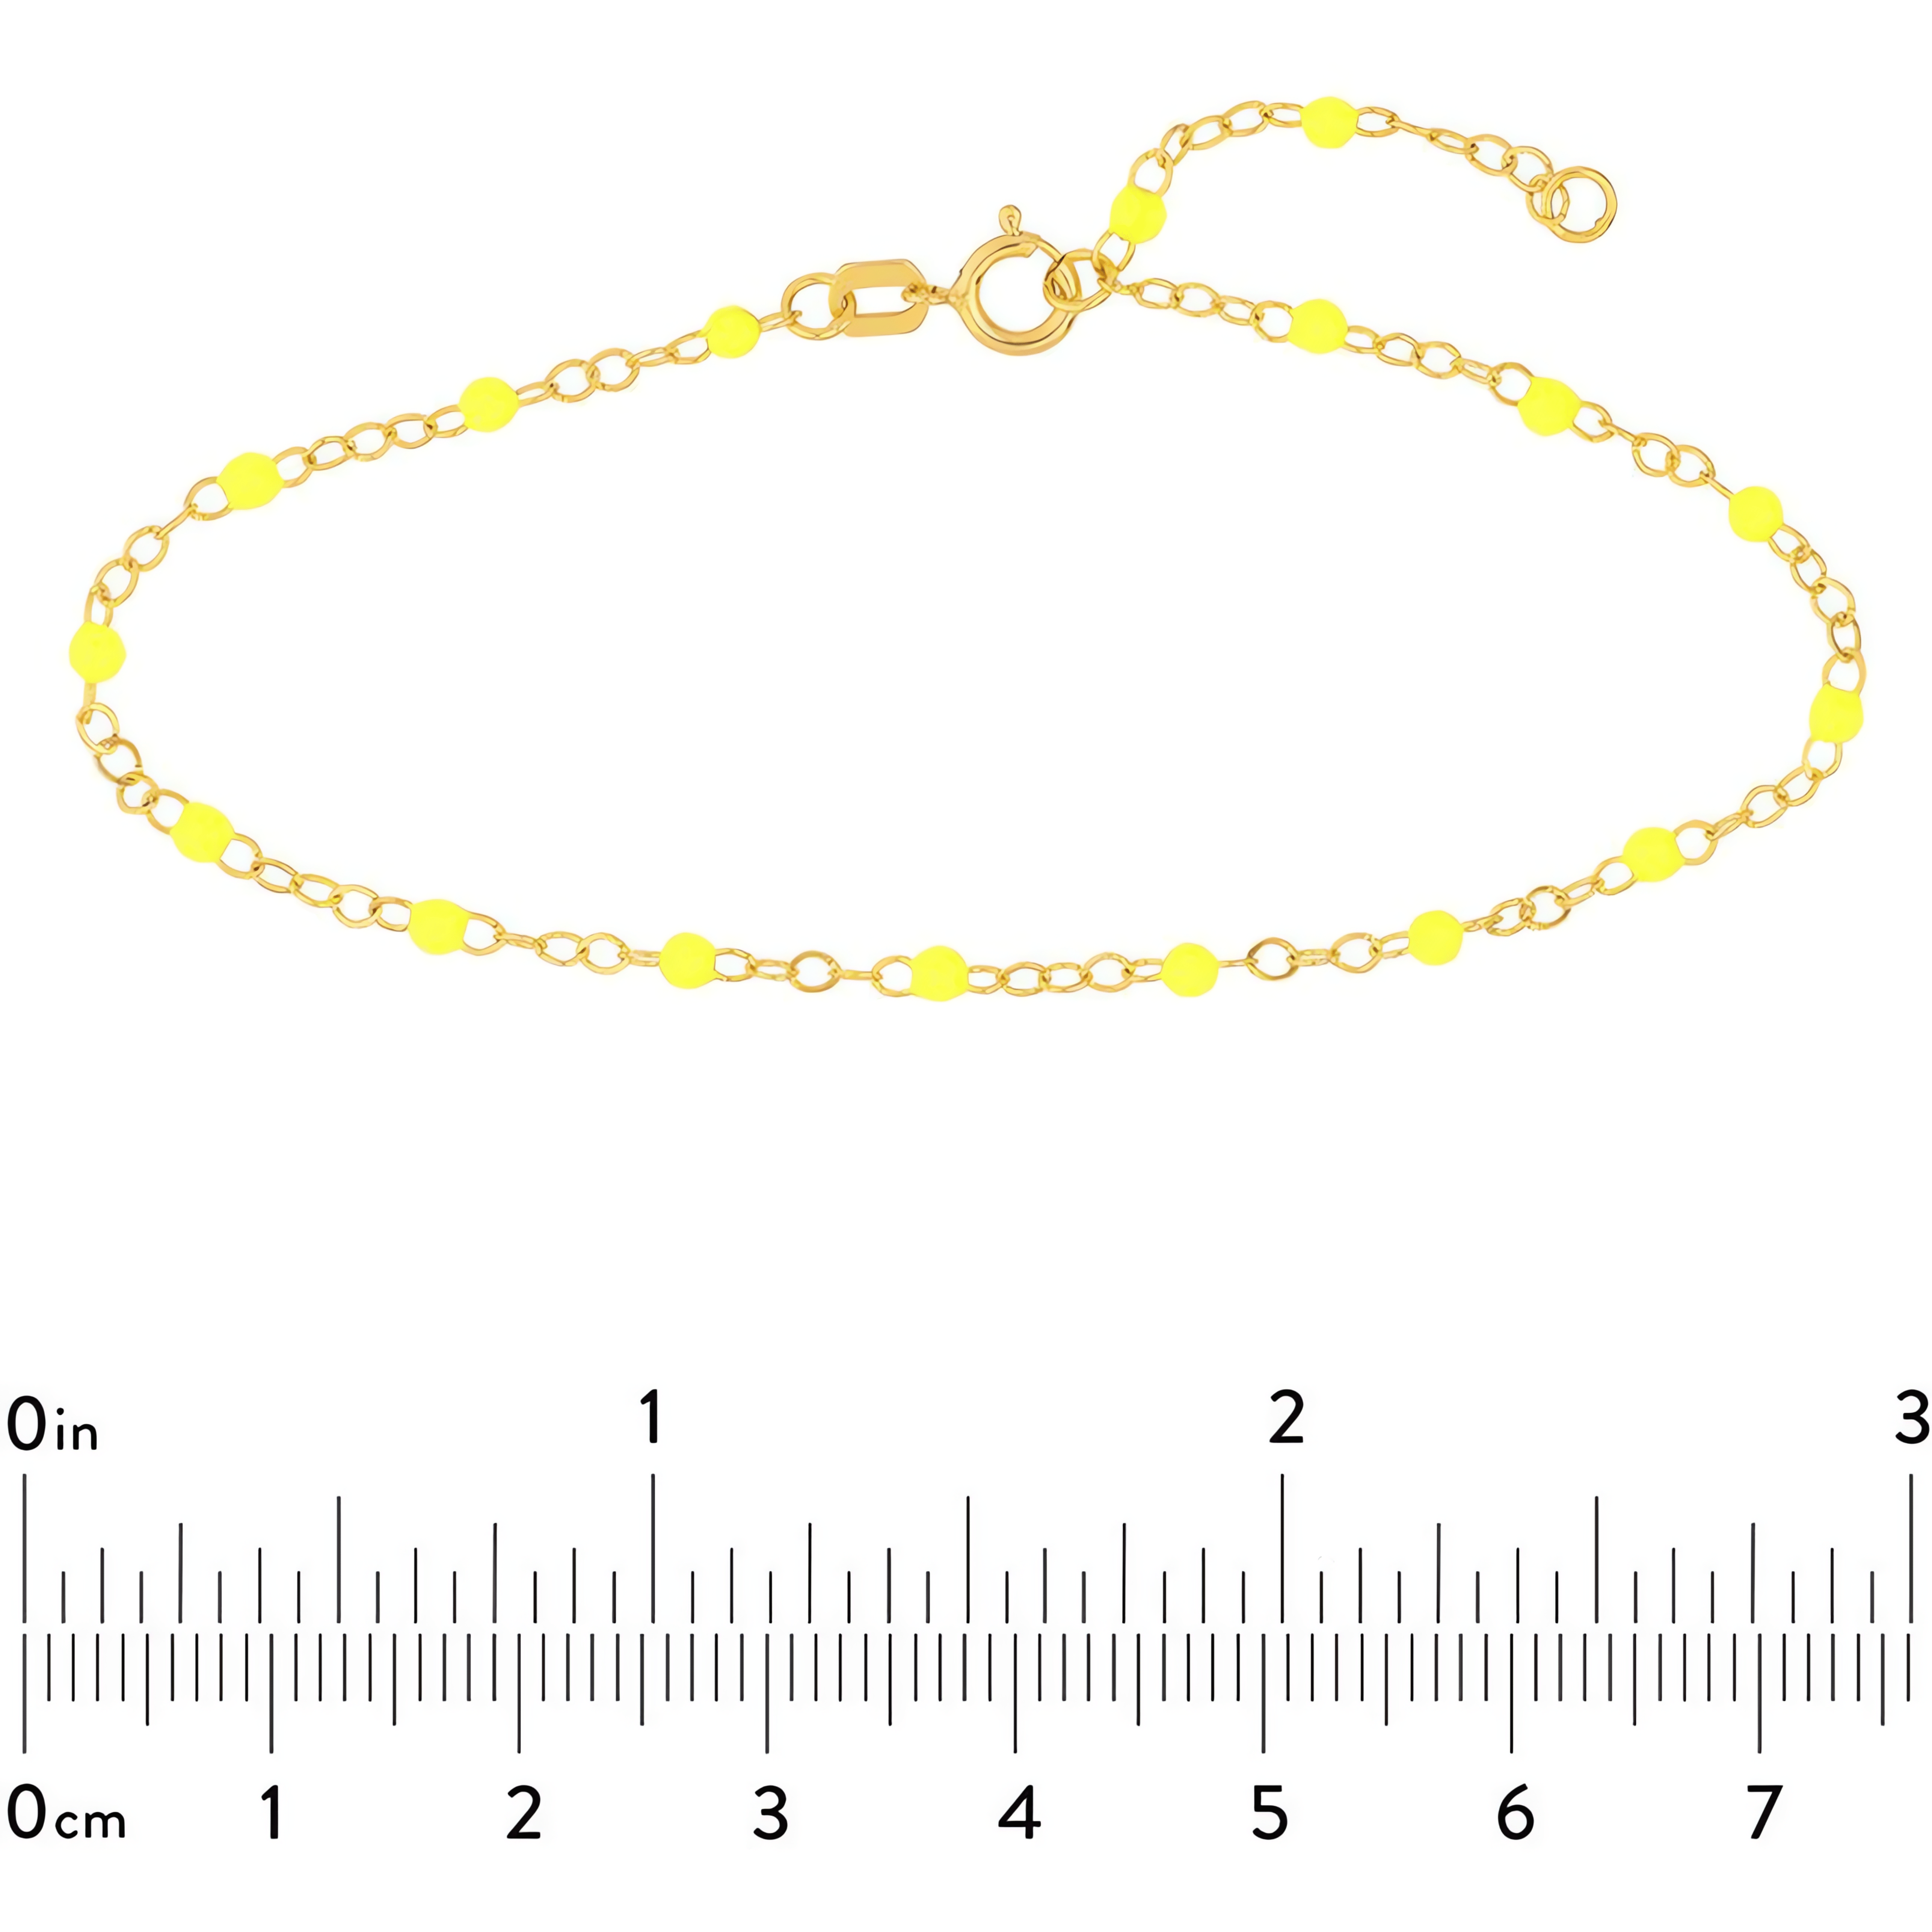 14kt yellow gold/measurement